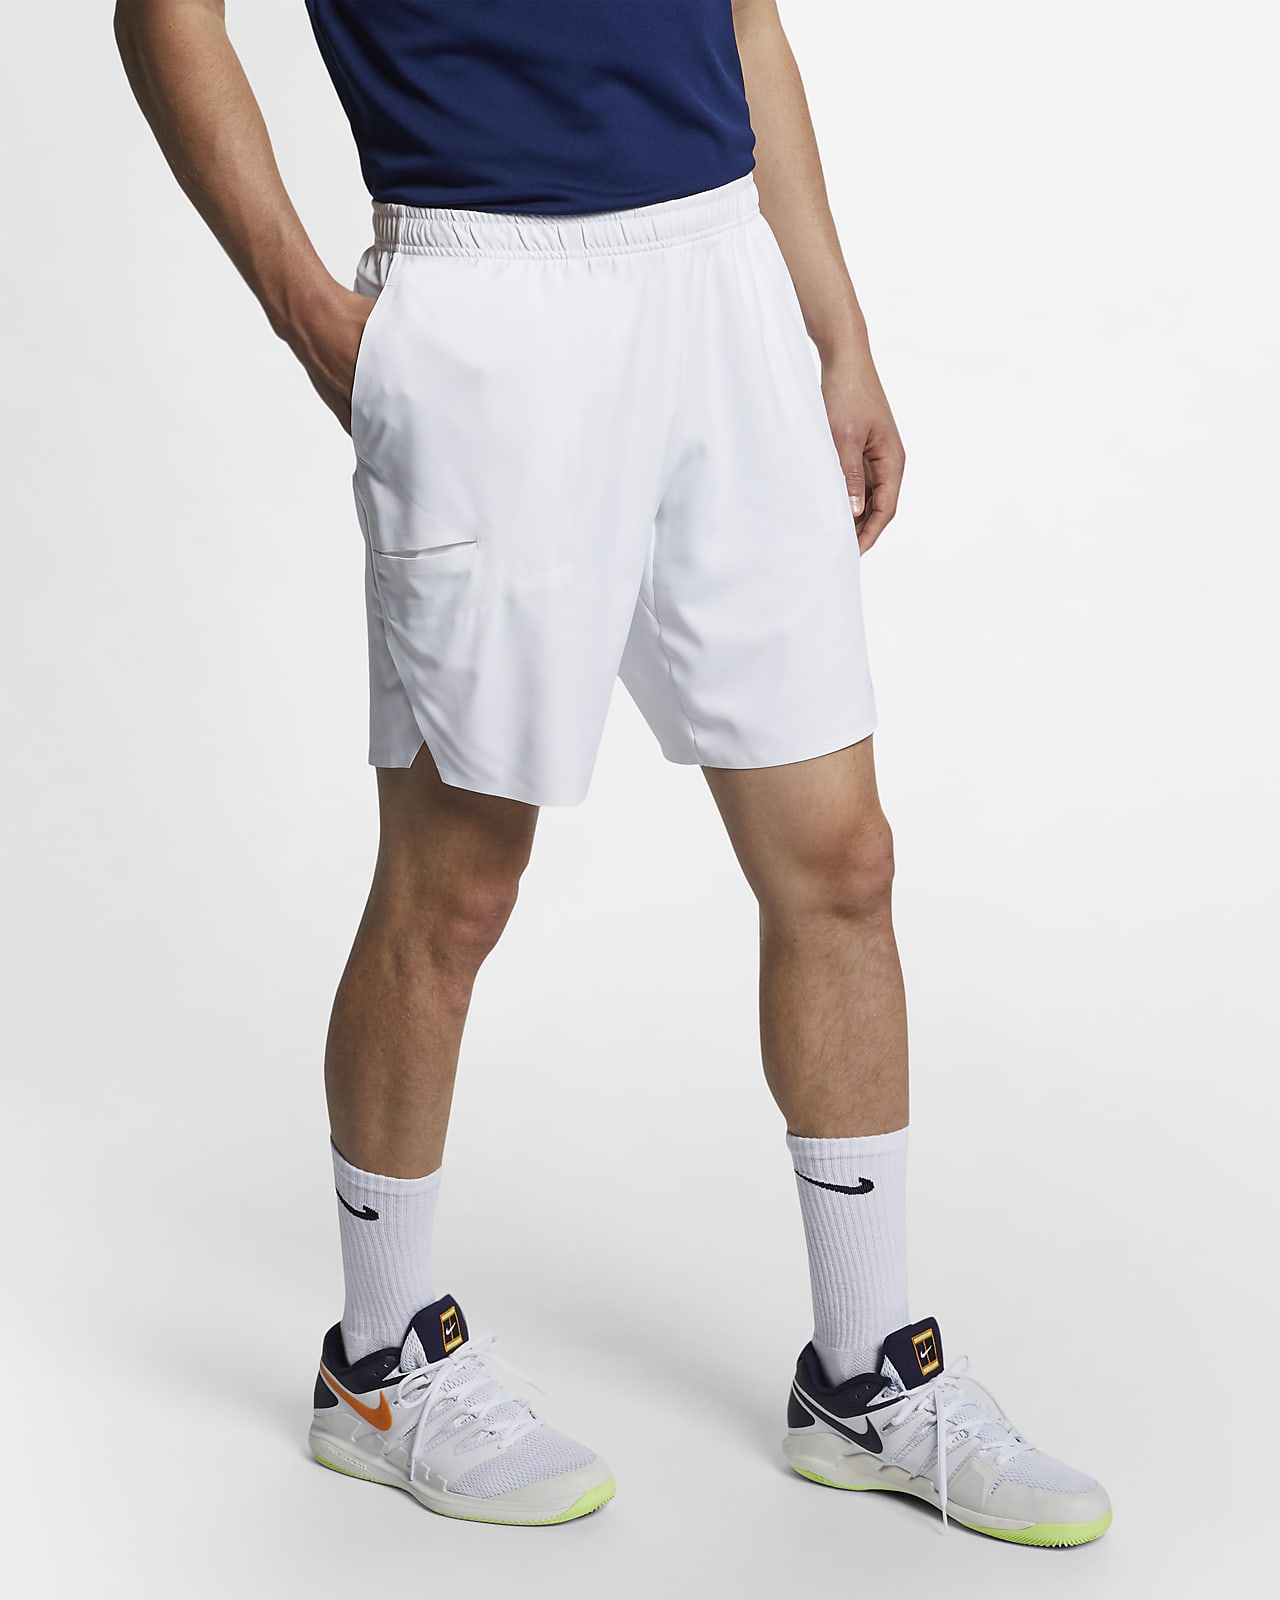 NikeCourt Flex Ace 9" 男子网球短裤